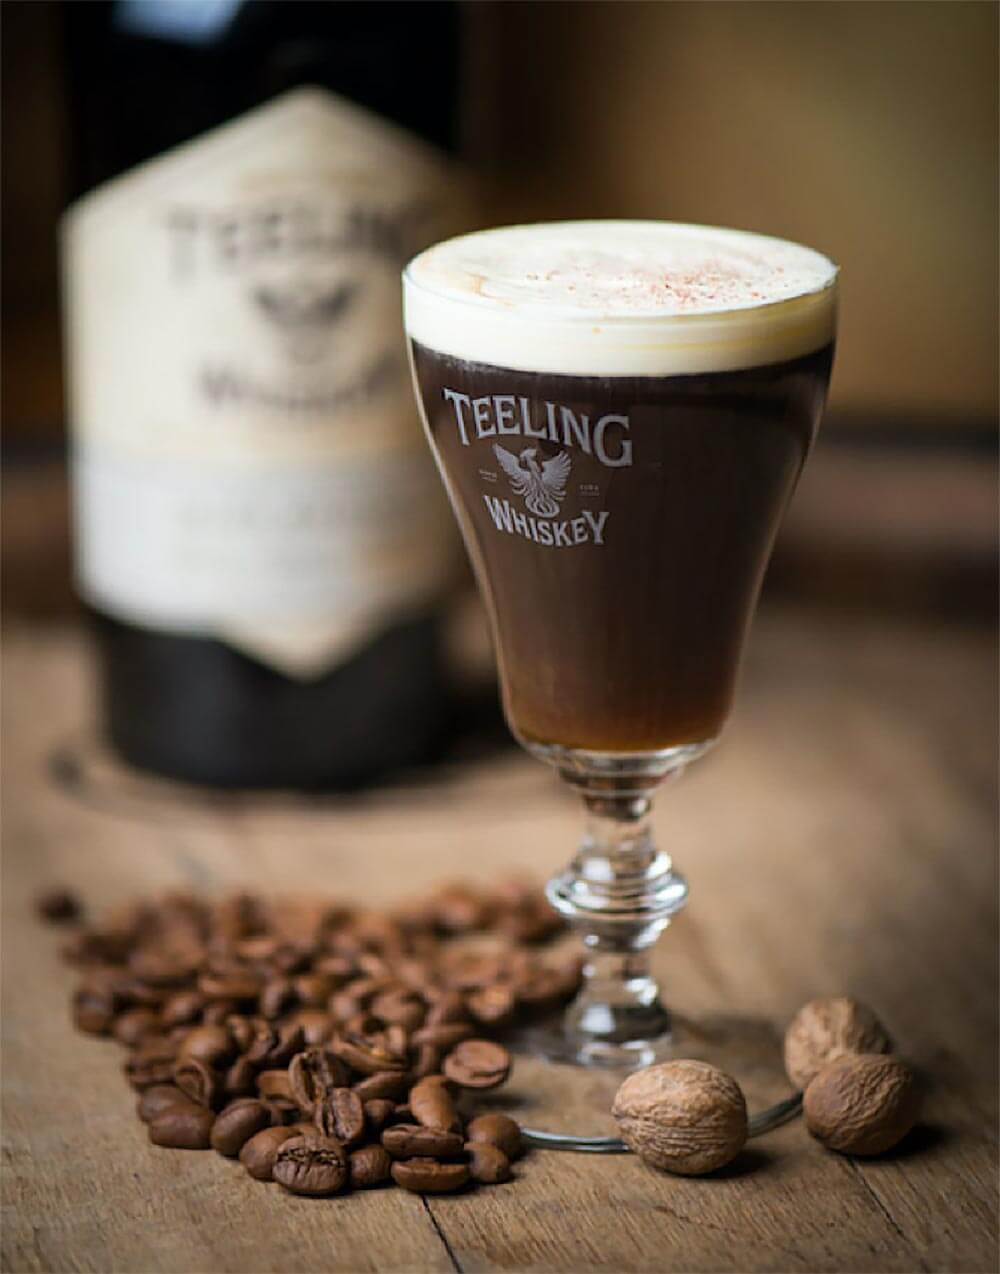 The Teeling Whiskey Irish Coffee, bottle and coffee beans